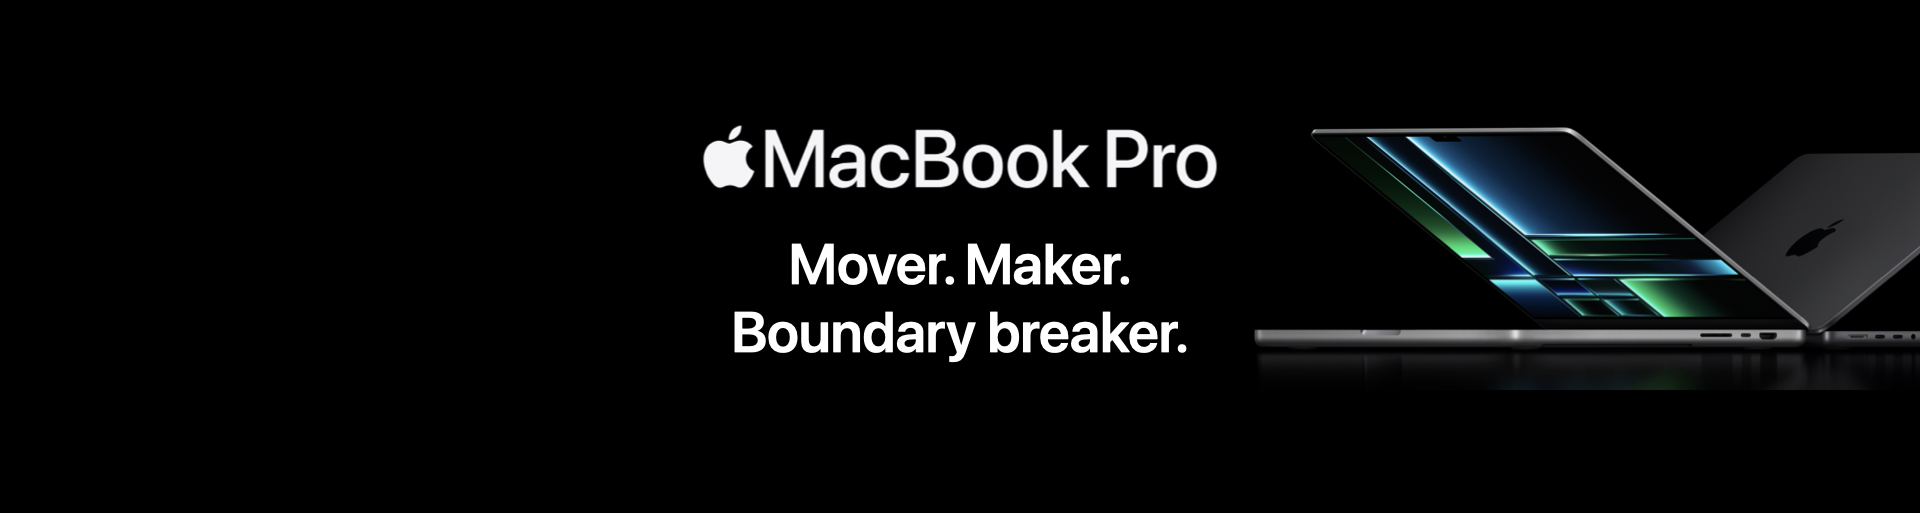 MacBook Pro. Mover. Maker. Boundary breaker.